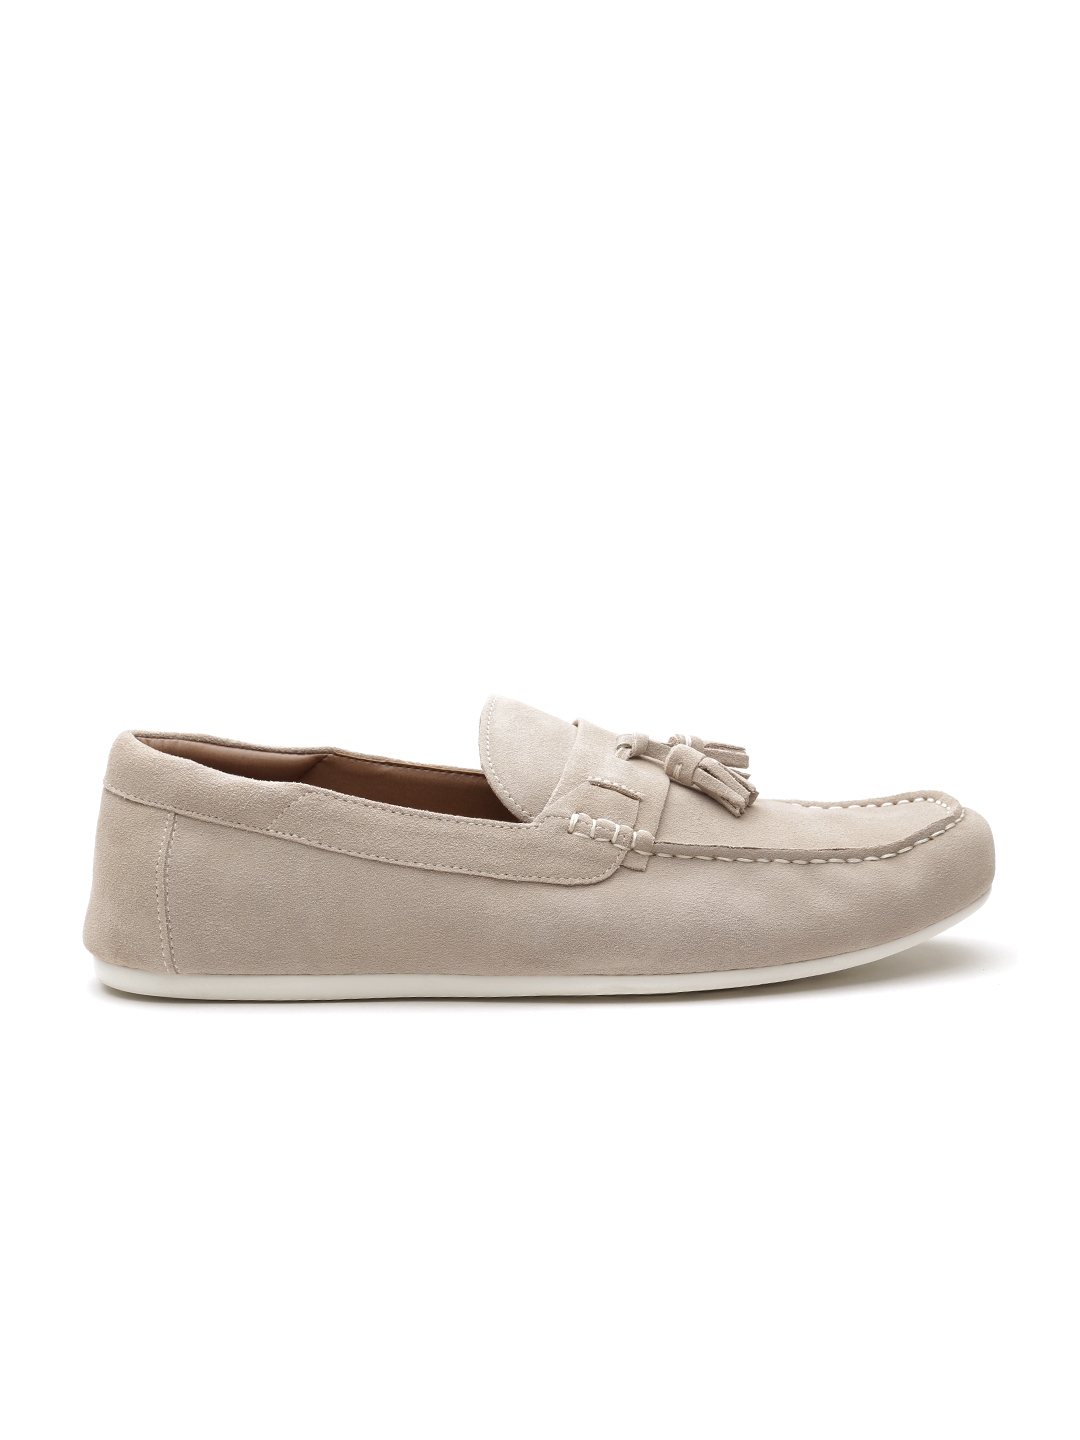 Buy ALDO Men Beige Suede Loafers - Casual Shoes for Men 1949095 | Myntra